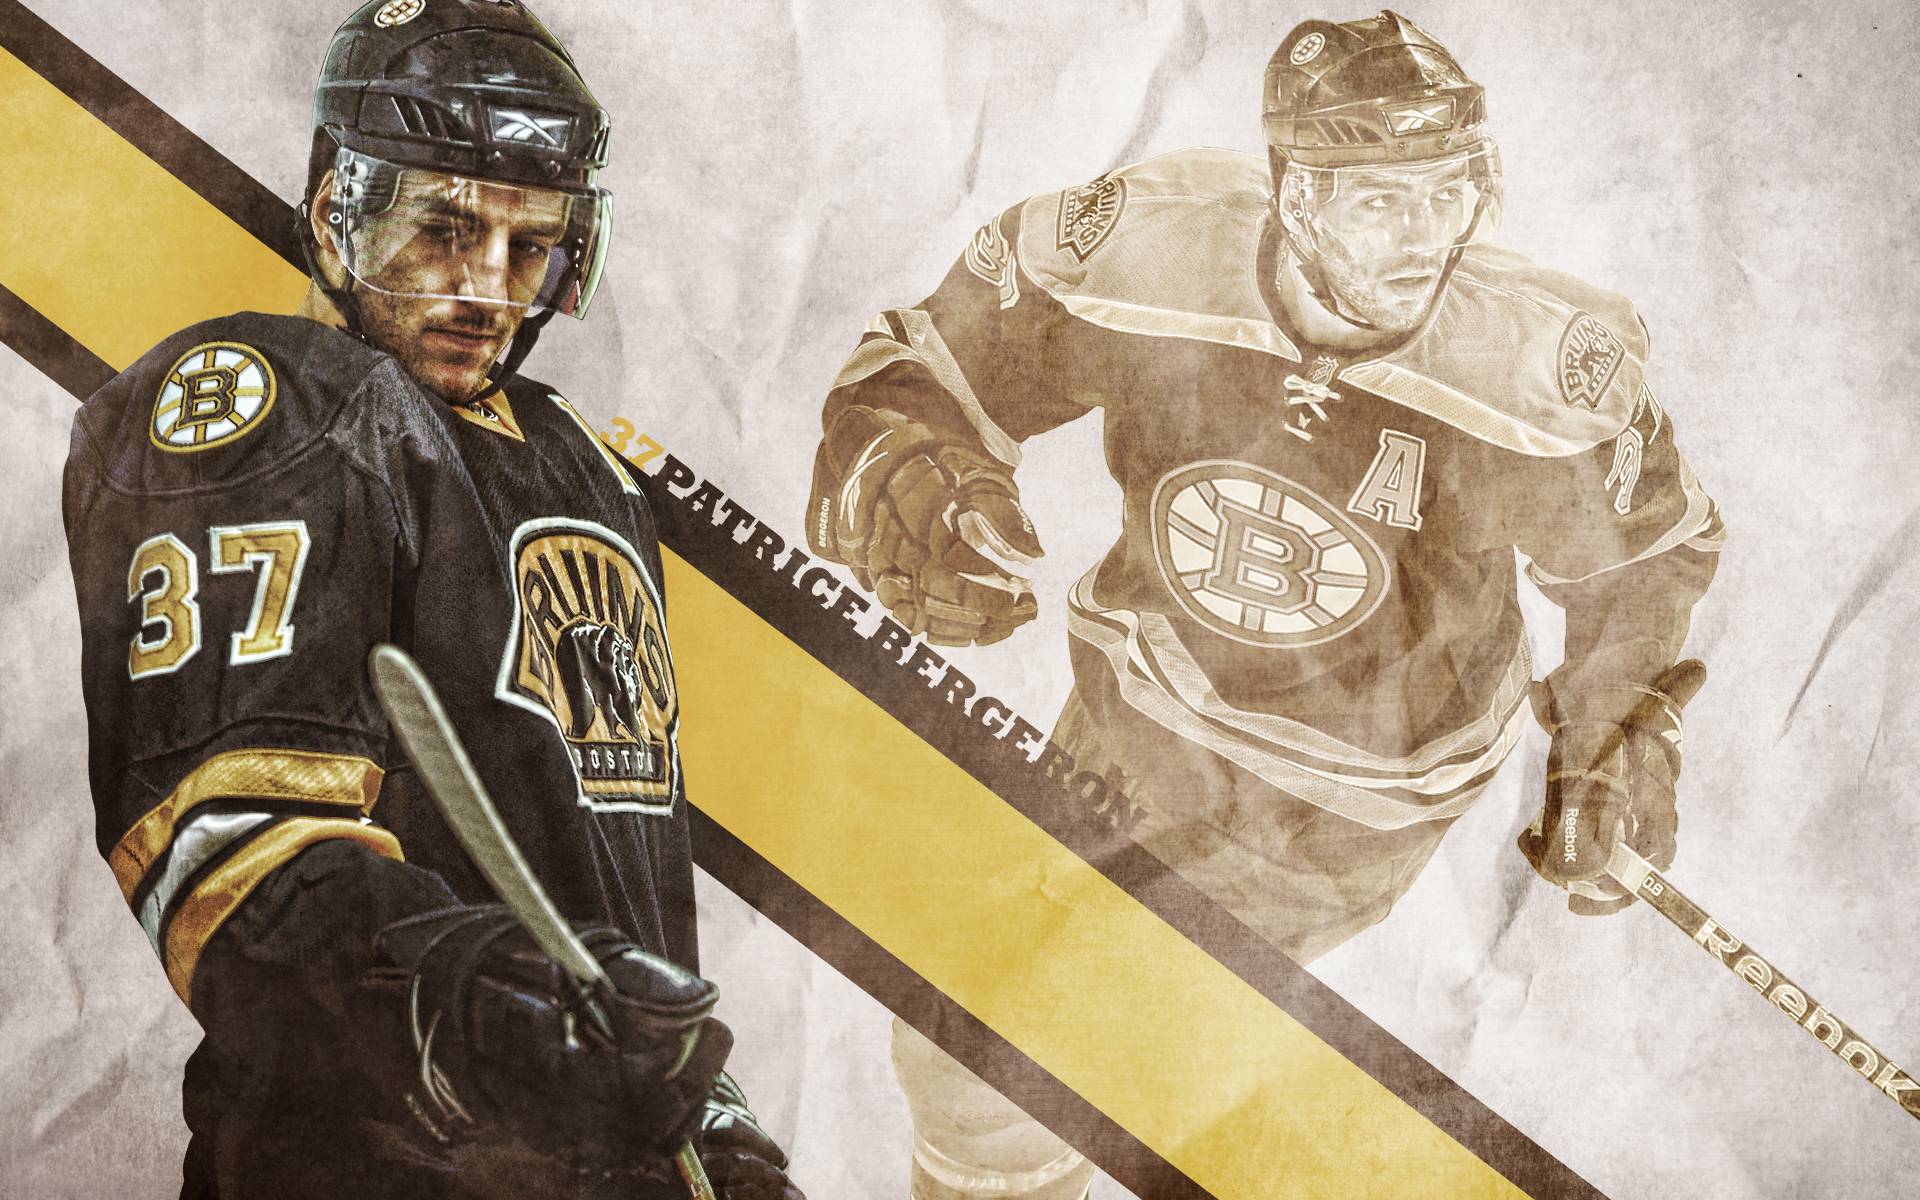 Boston Bruins HD image. Boston Bruins wallpaper